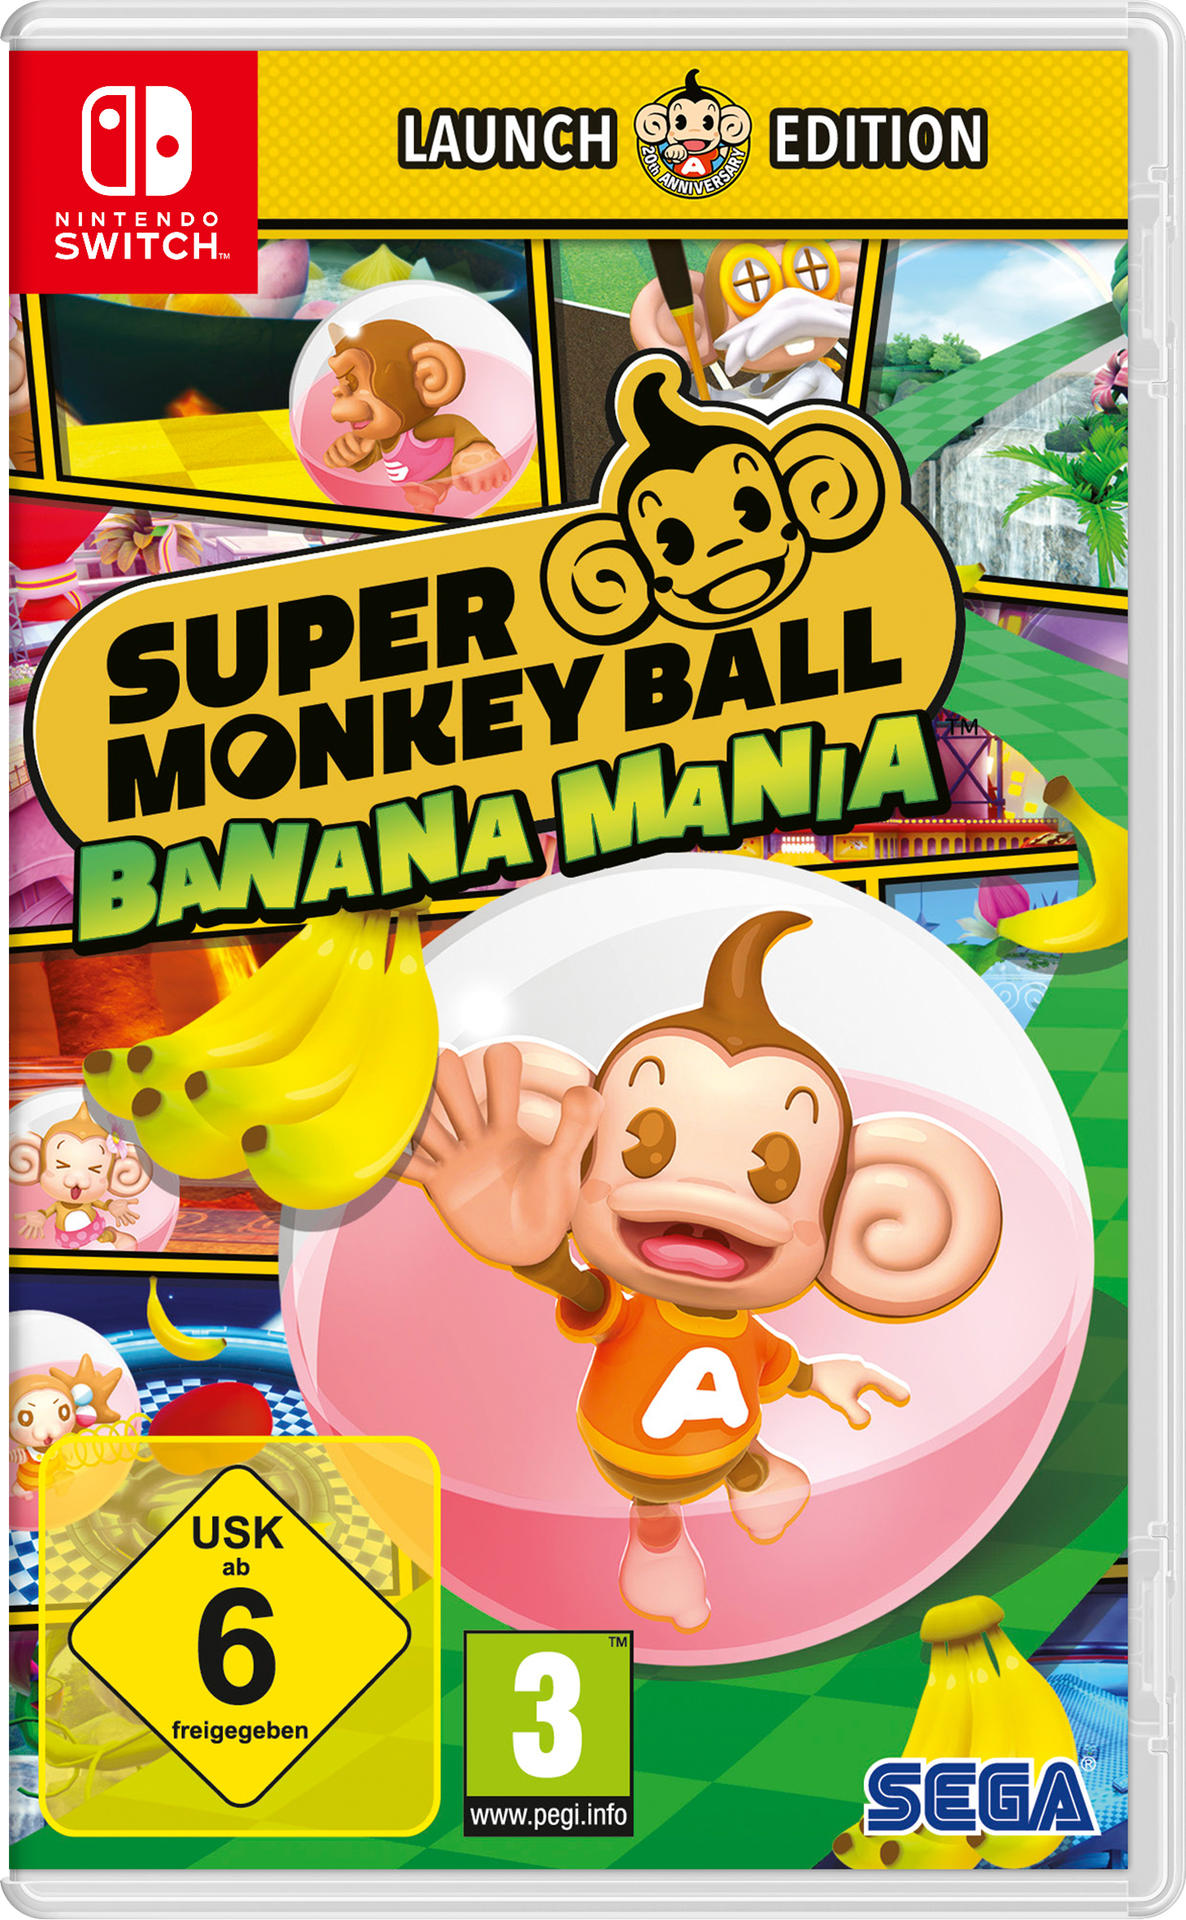 SW SUPER MONKEY BALL Switch] EDITION MANIA [Nintendo - LAUNCH BANANA